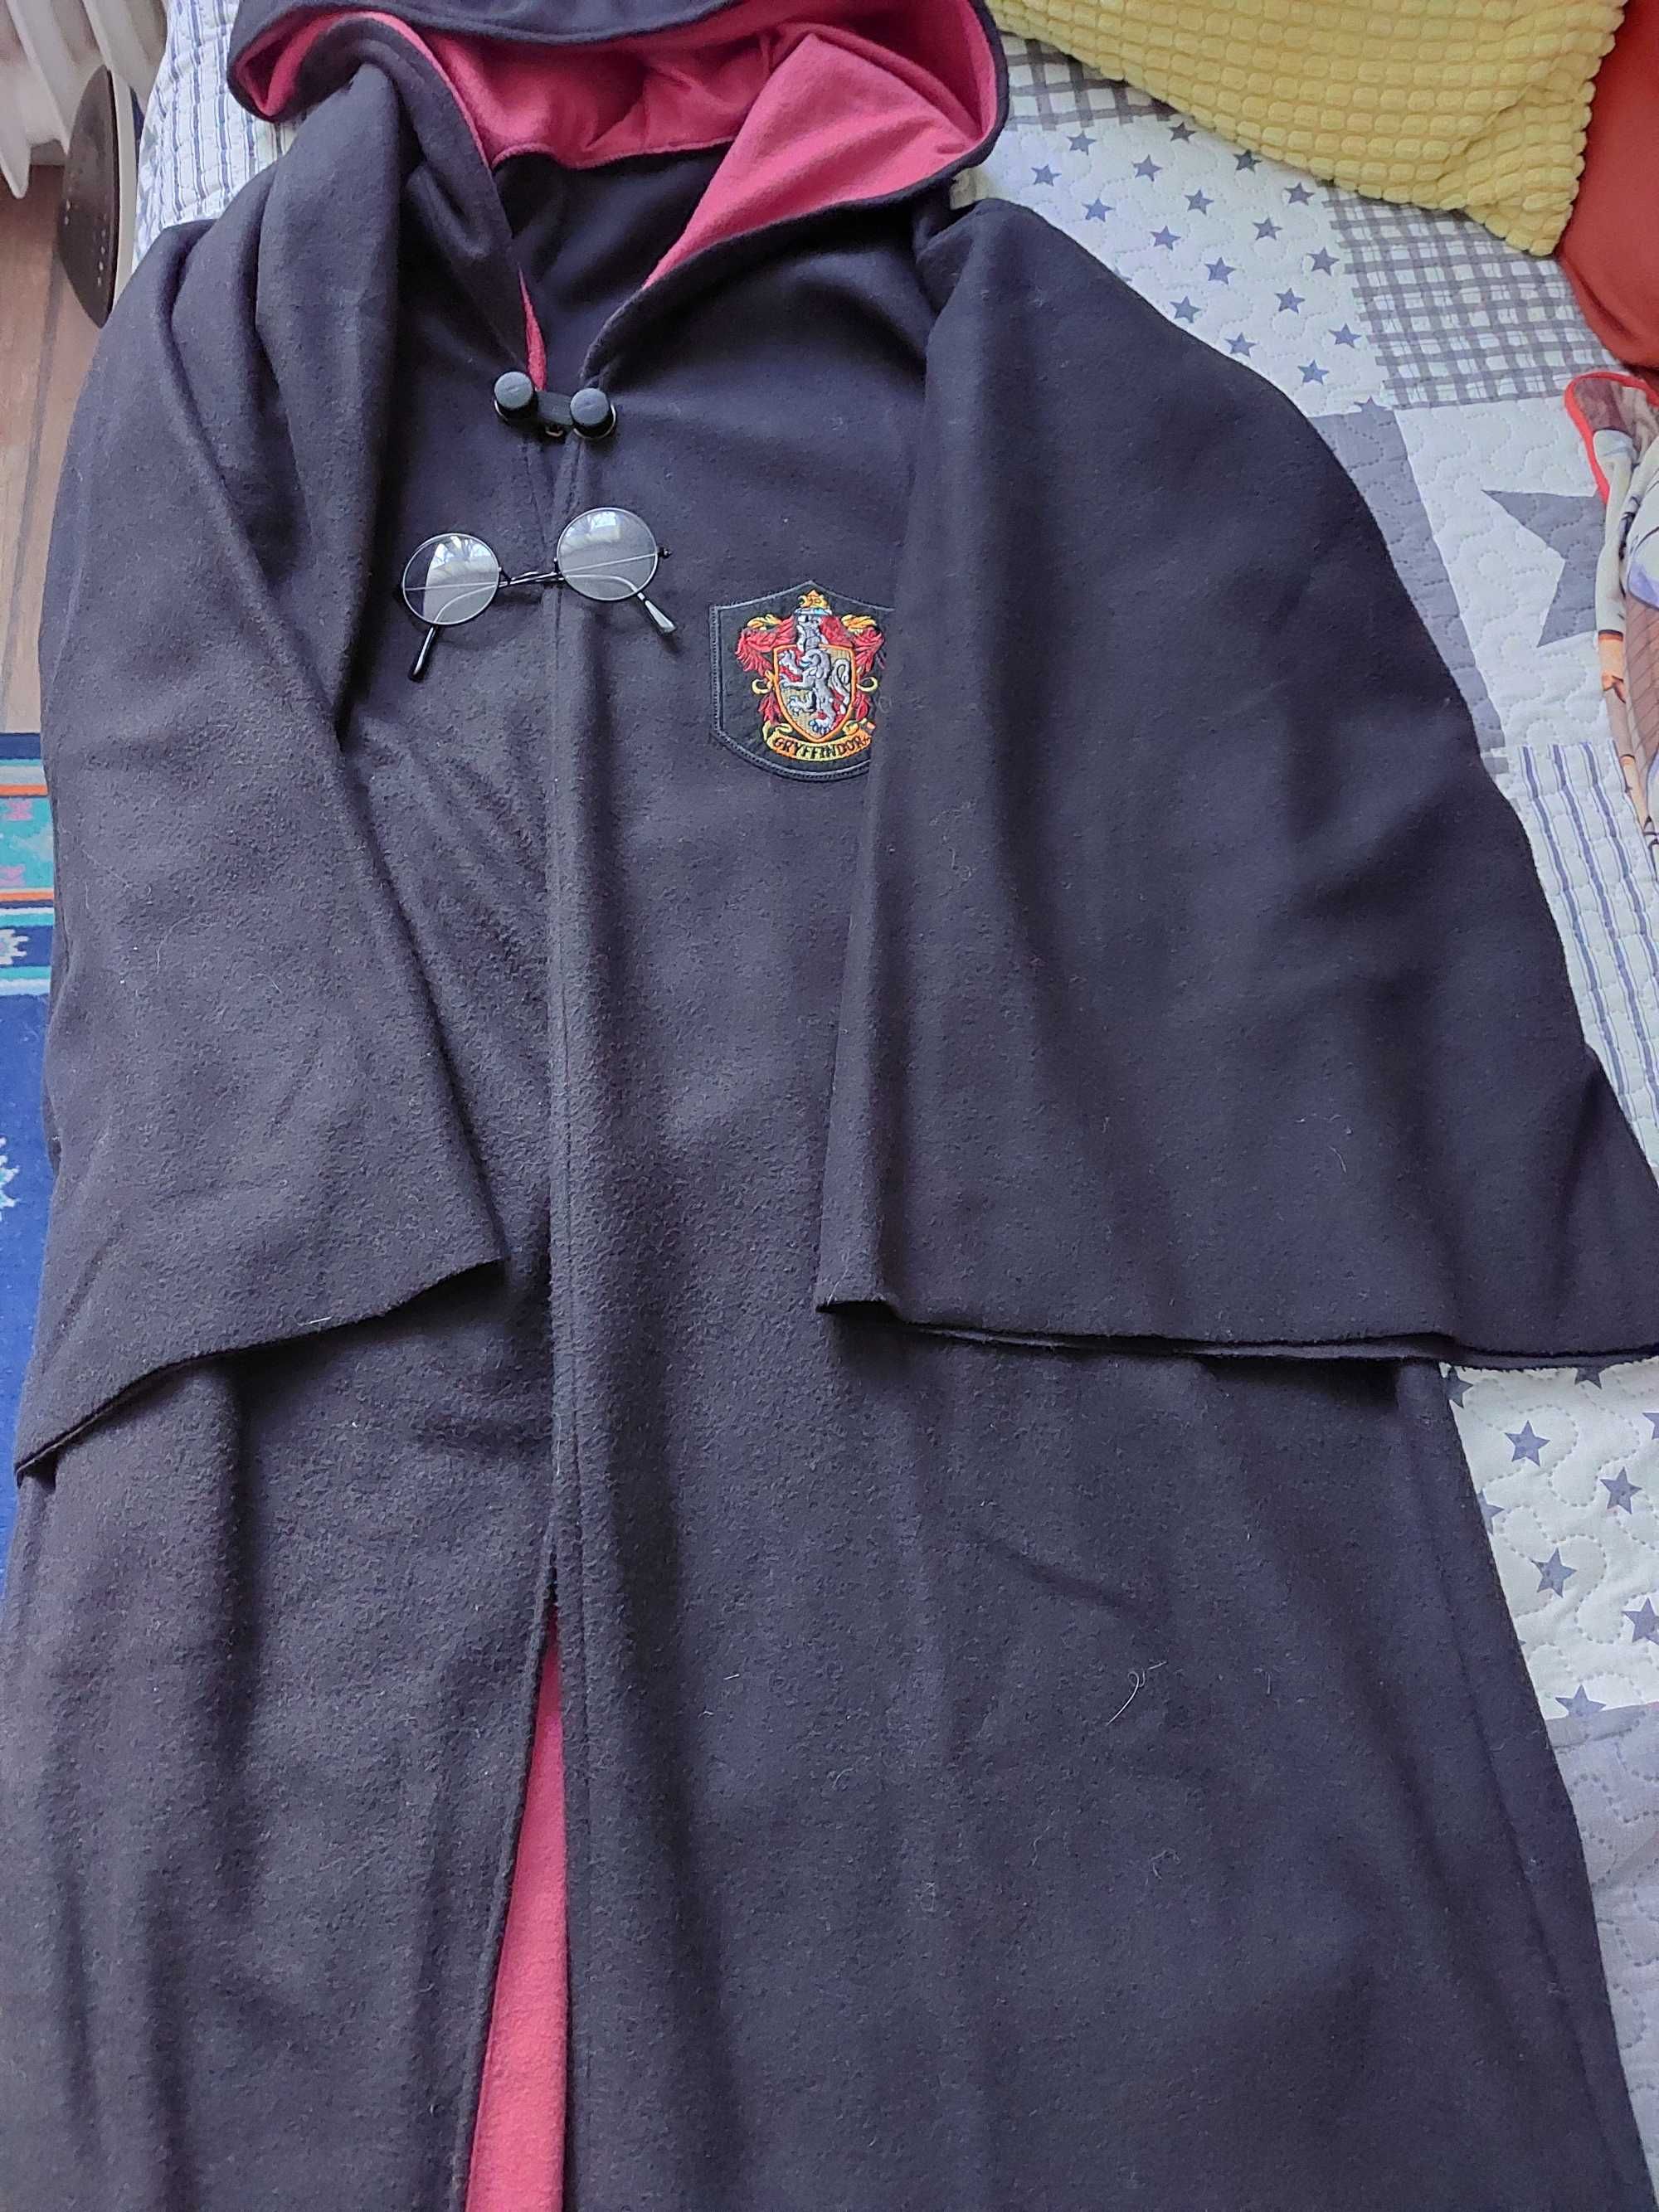 Costum robă și ochelari Harry Potter